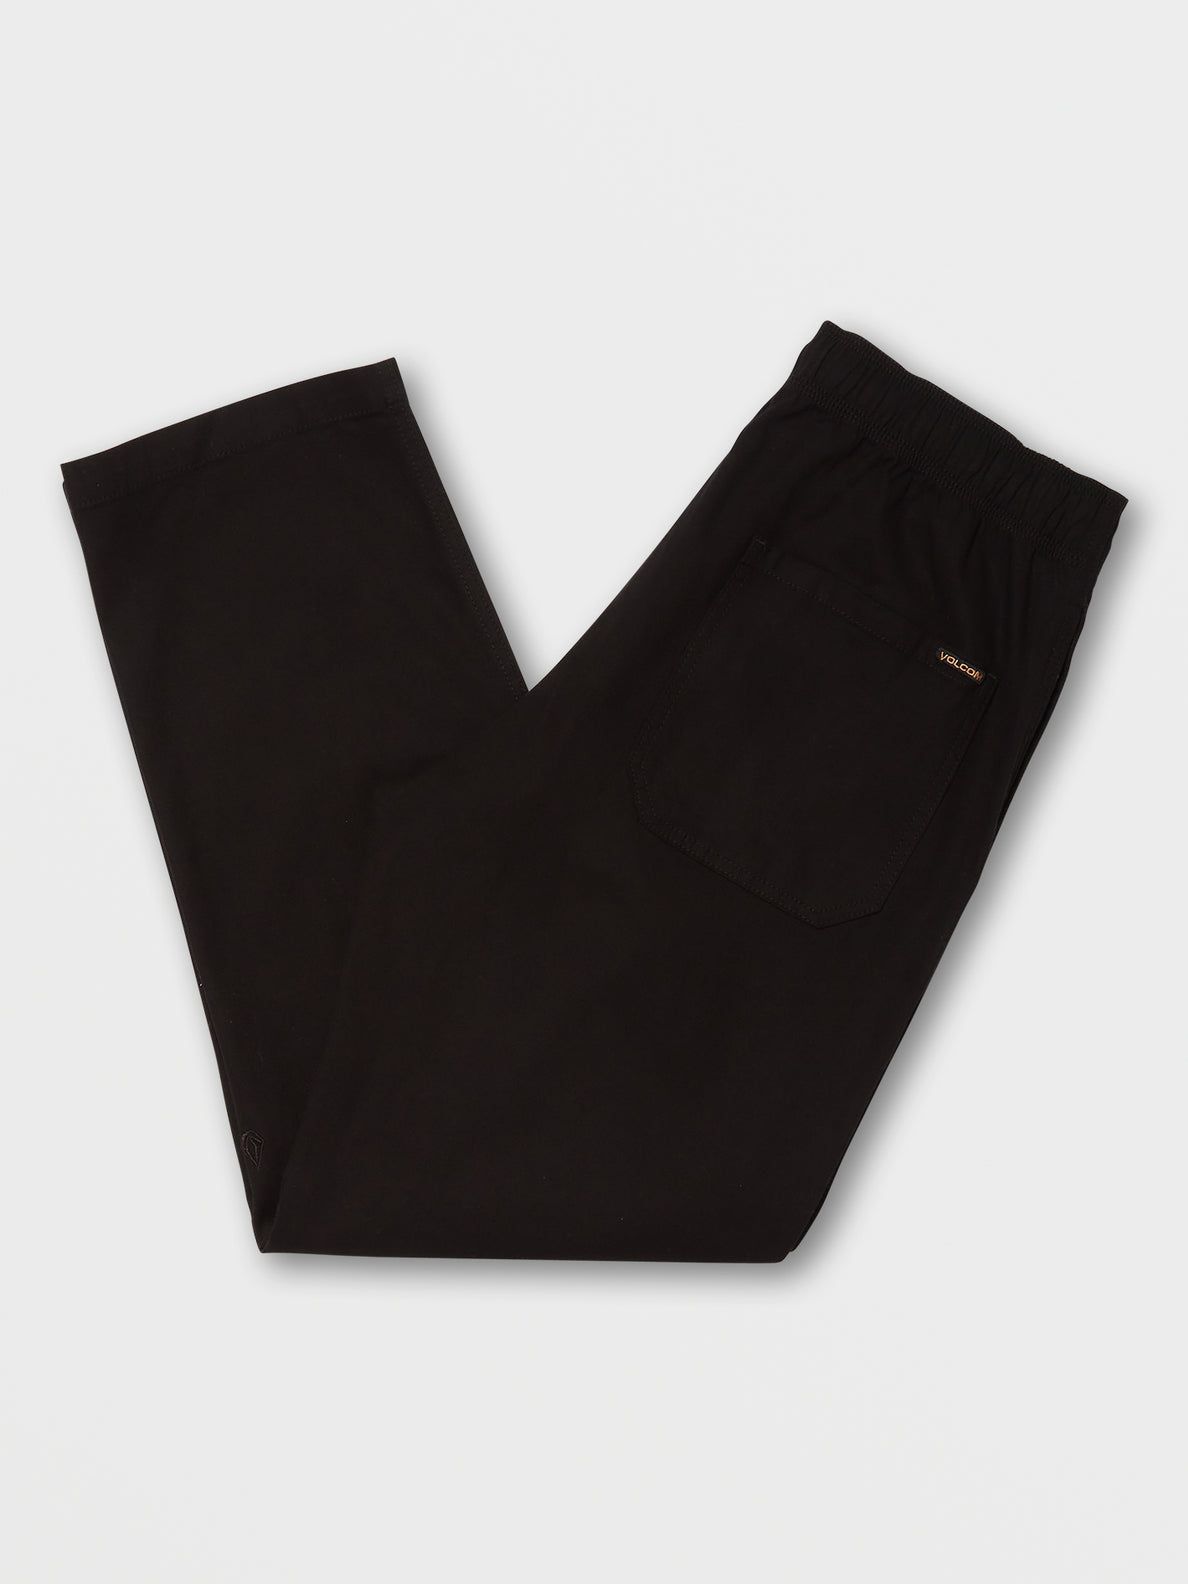 Psychstone Elastic Waist Pants - Black Combo